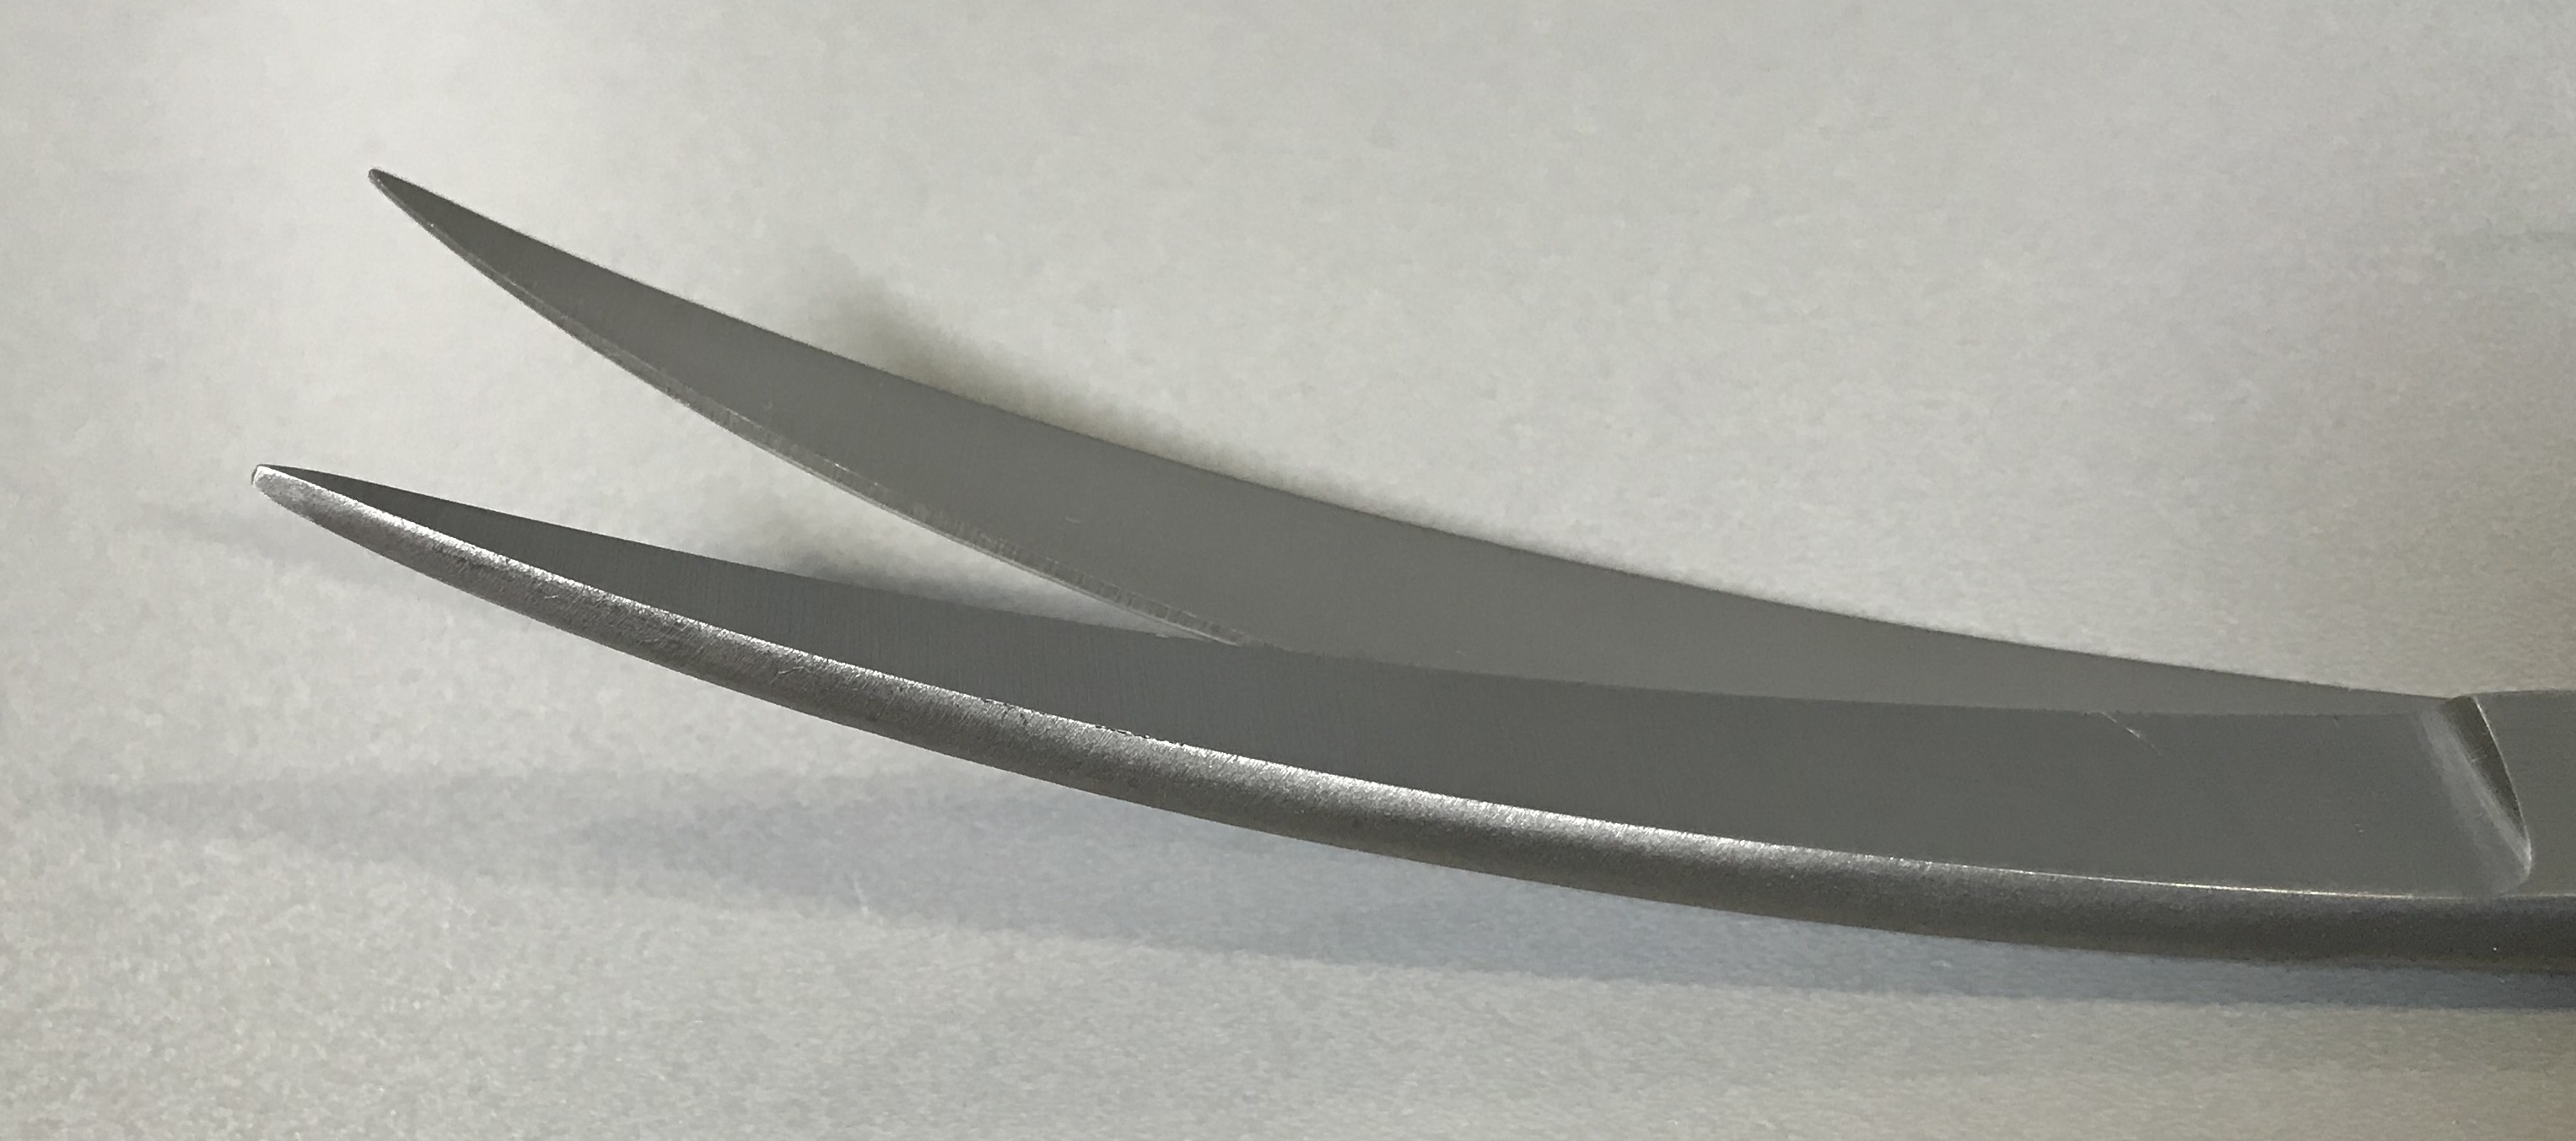 Curved Trimming Scissors - 10